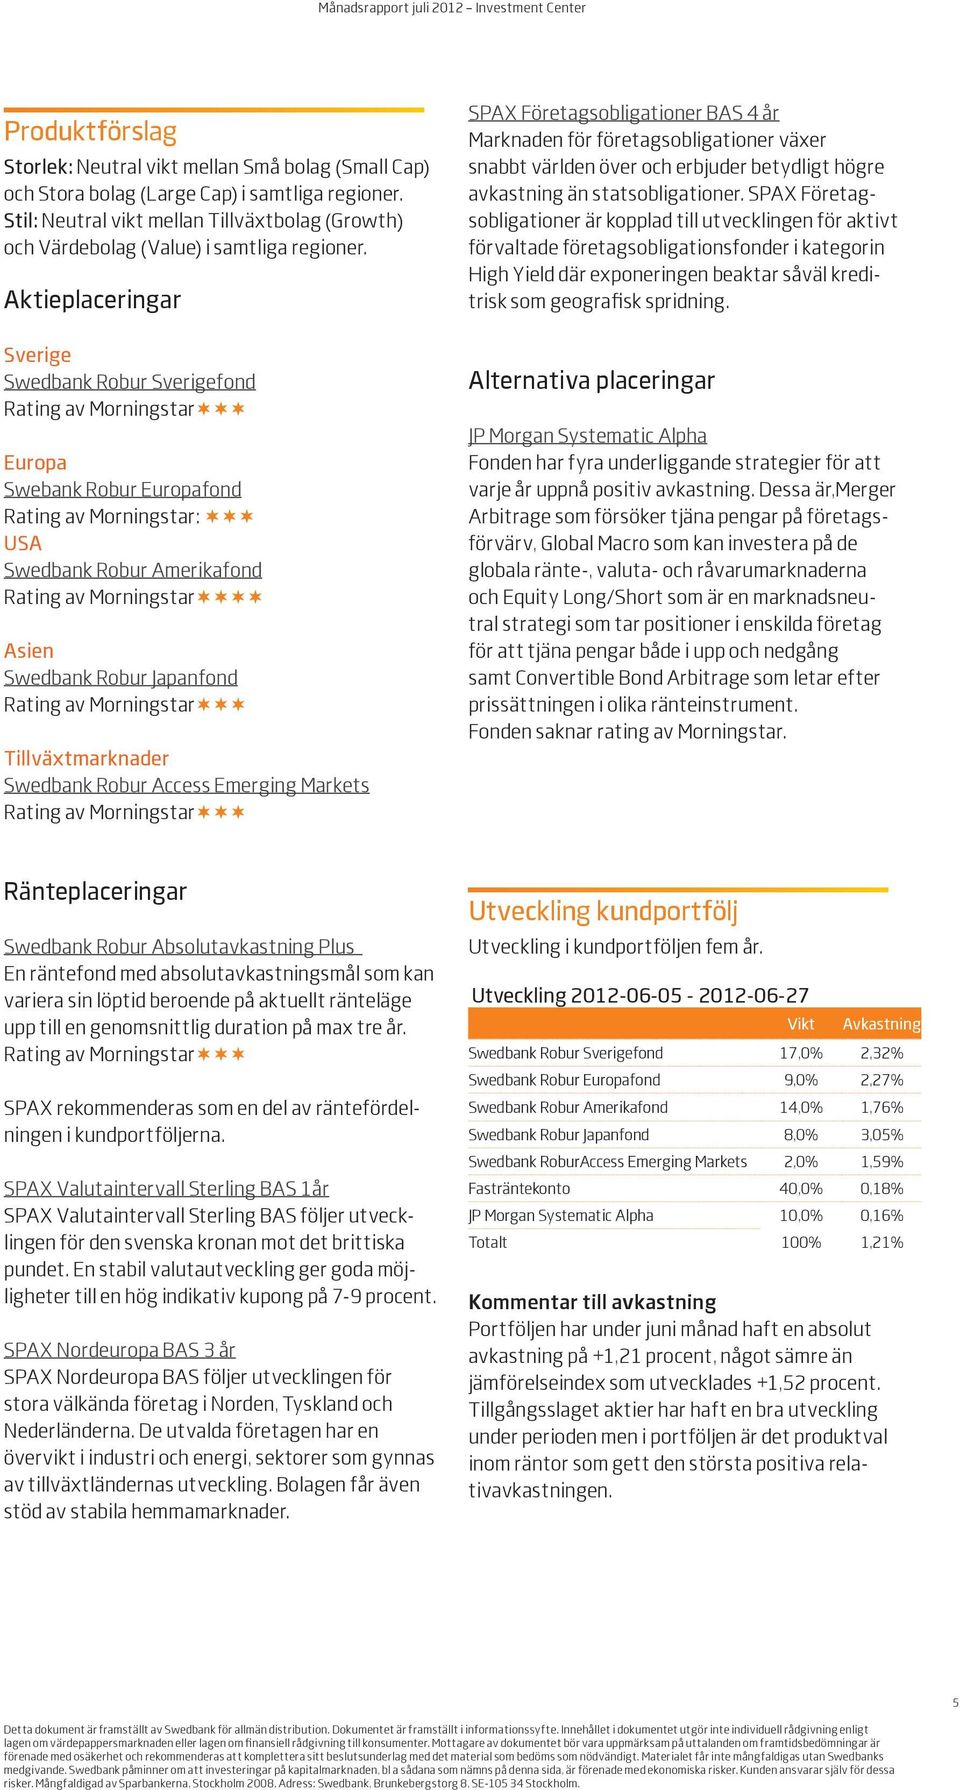 Aktieplaceringar Sverige Swedbank Robur Sverigefond Europa Swebank Robur Europafond Rating av Morningstar: Swedbank Robur Amerikafond Asien Swedbank Robur Japanfond Swedbank Robur Access Emerging